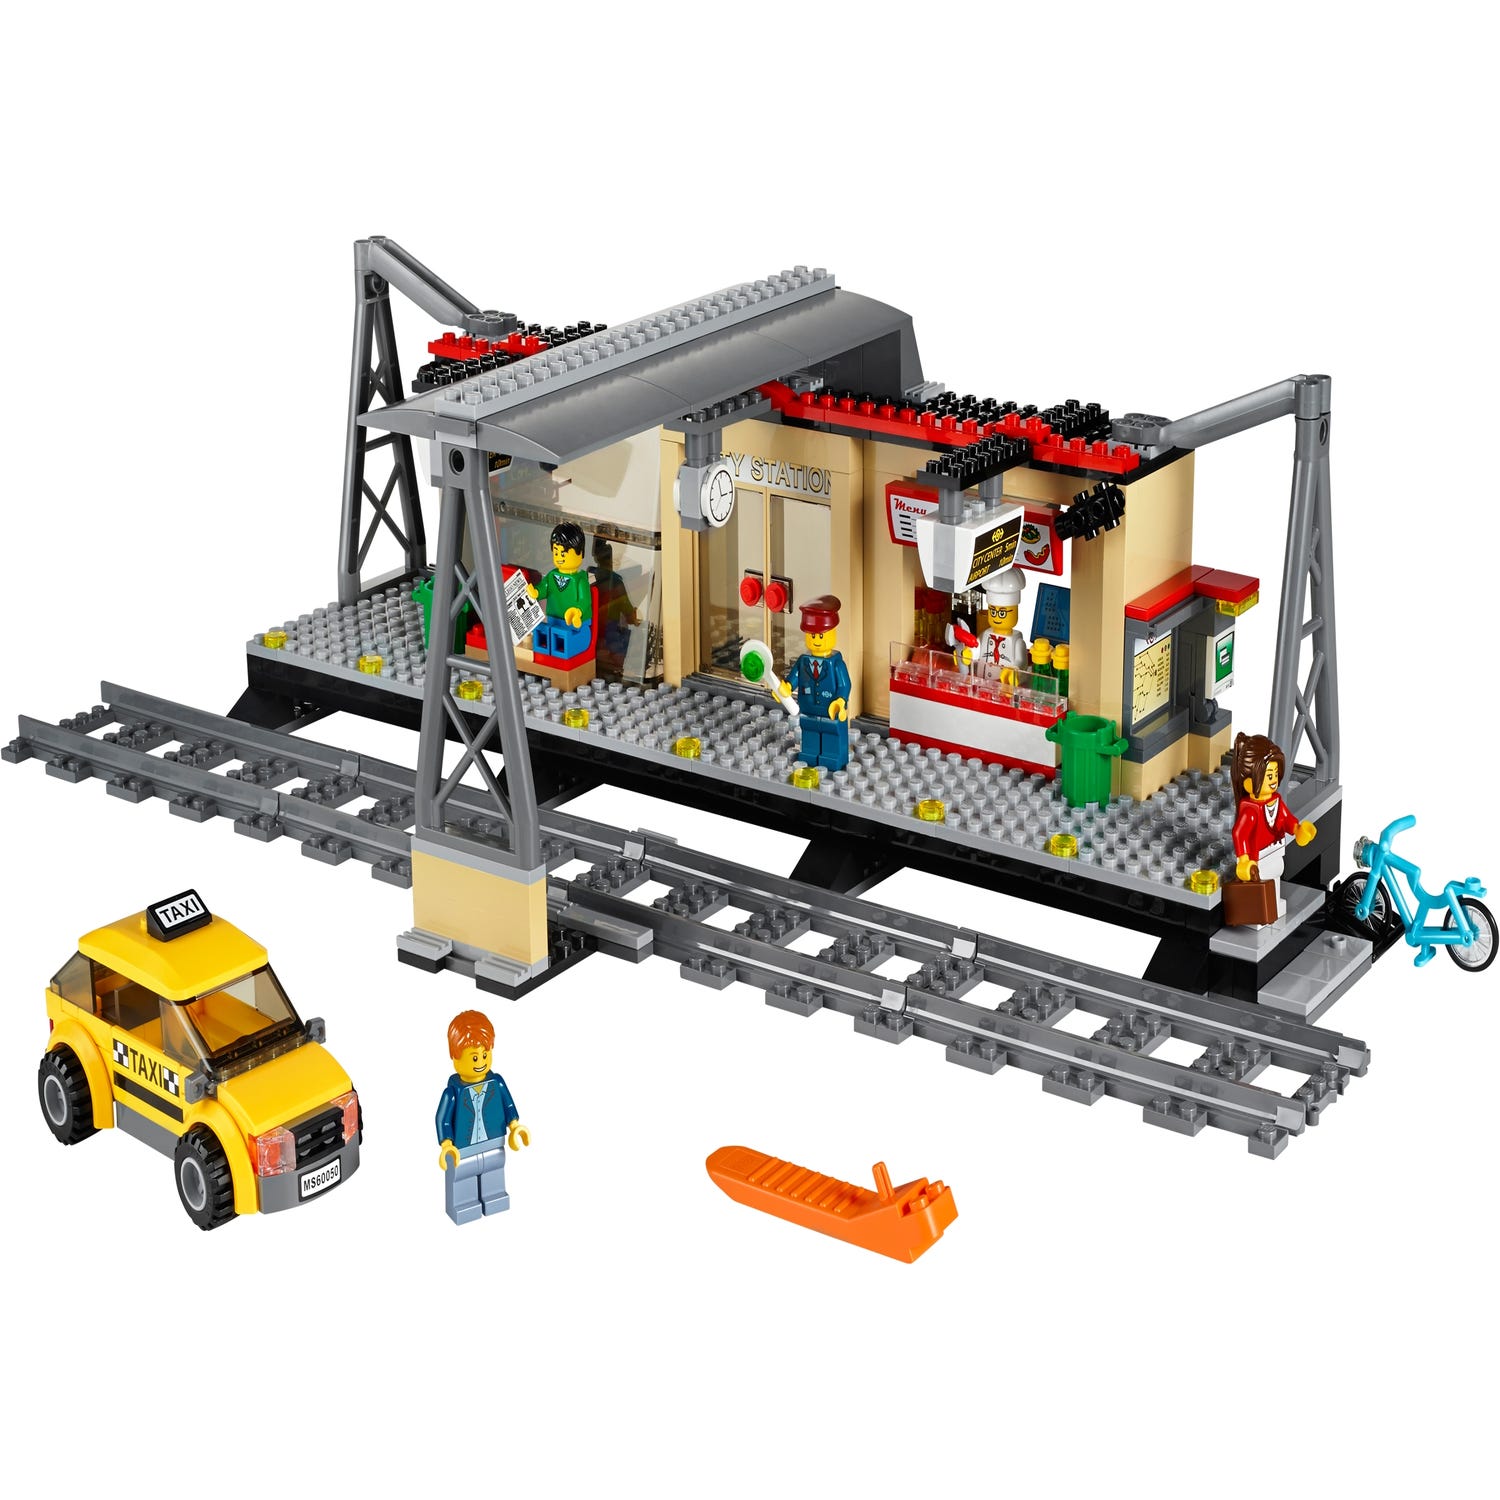 LEGO City Trains Train Station 60050 Building Toy